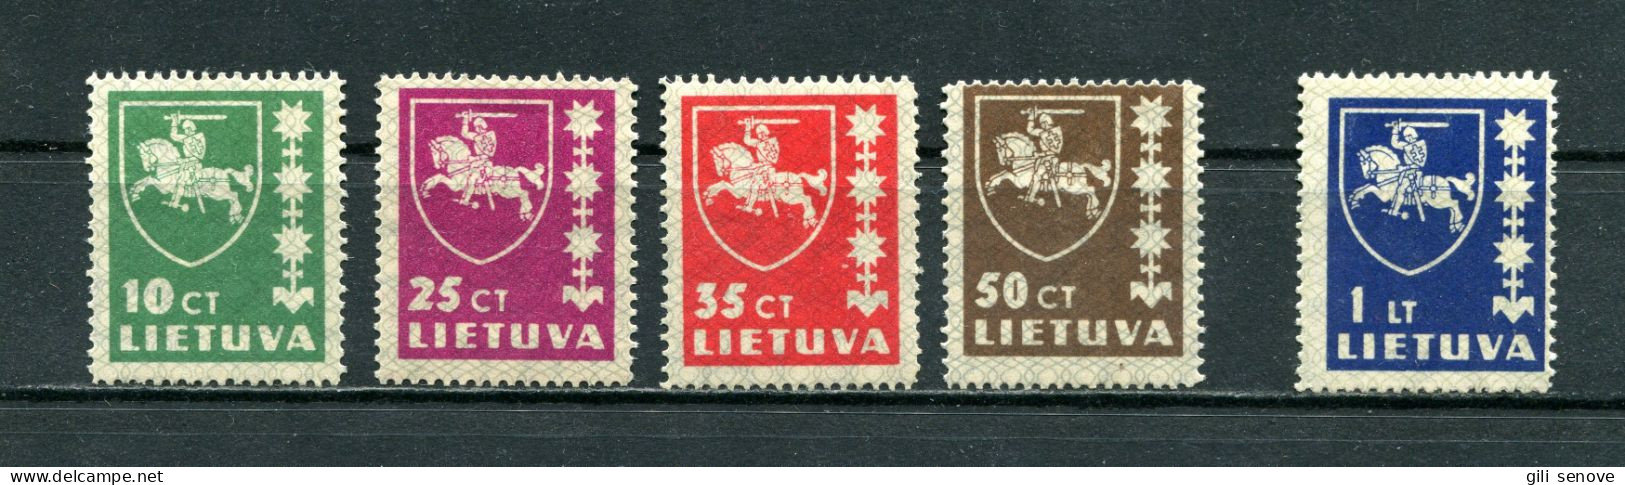 Lithuania 1937 Mi. 413-416, 432 Sc 301-305 Definitives MNH** - Lithuania